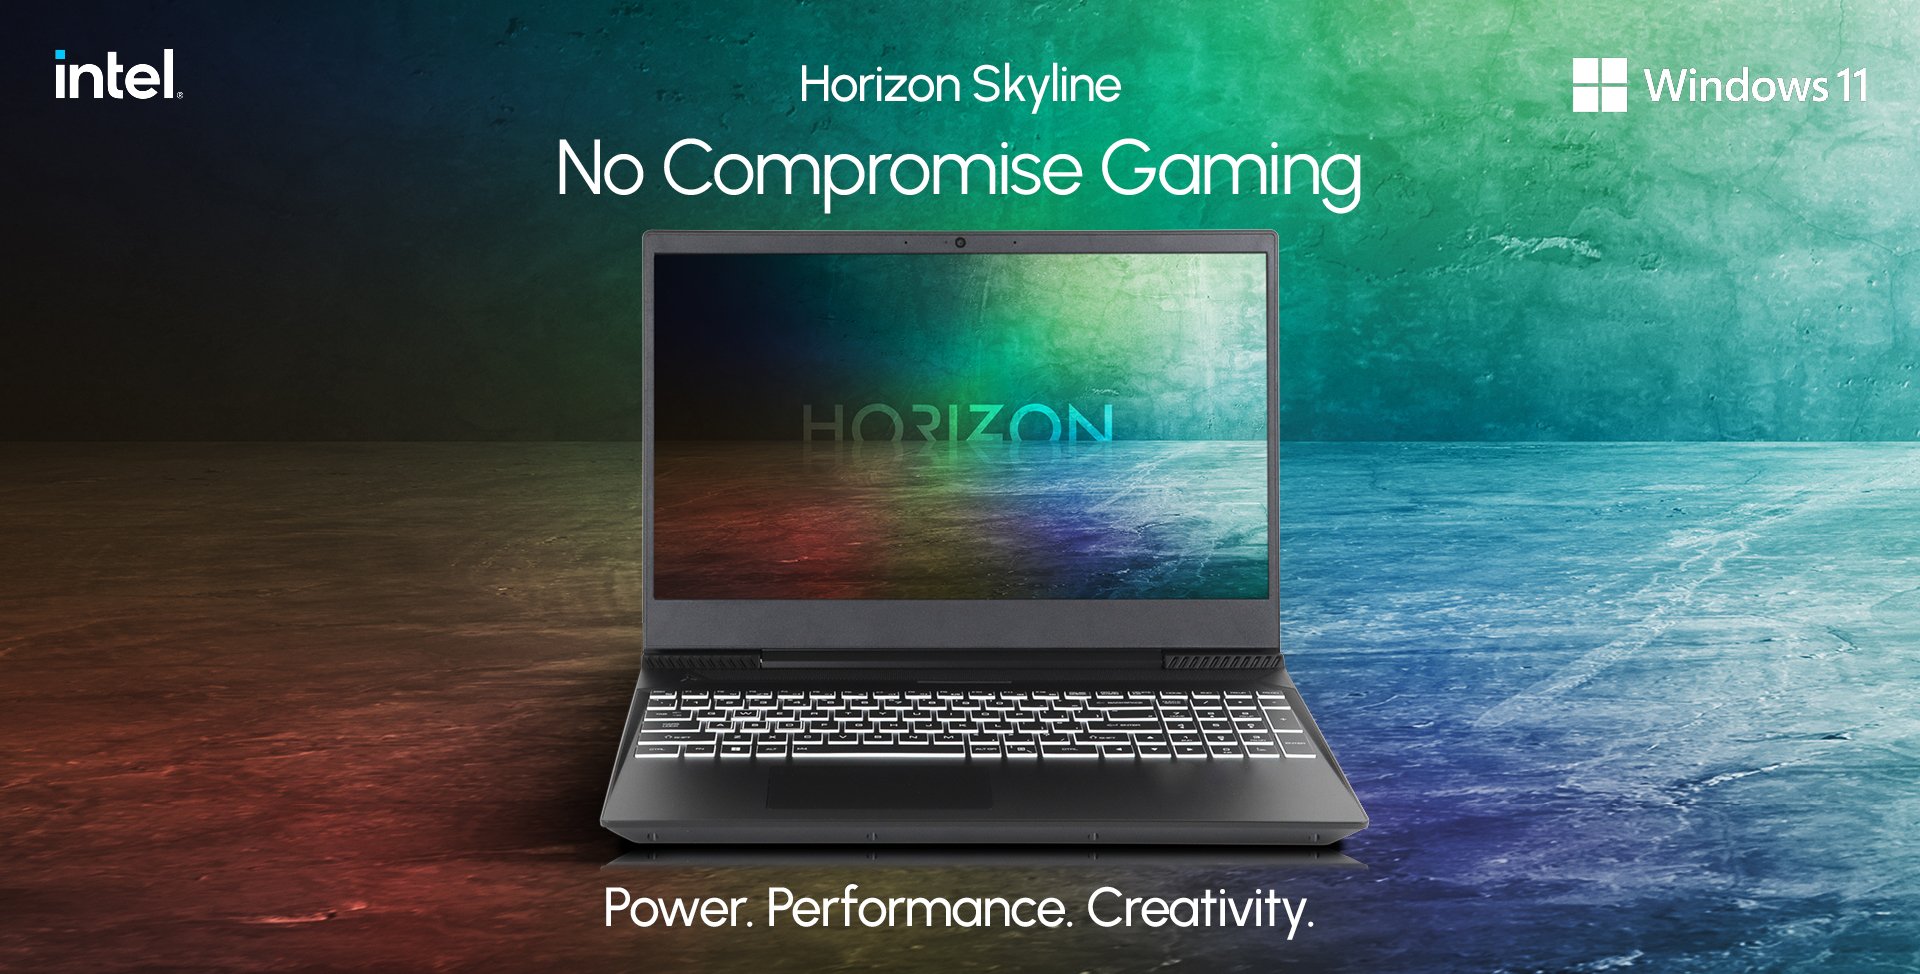 Horizon Skyline Laptop